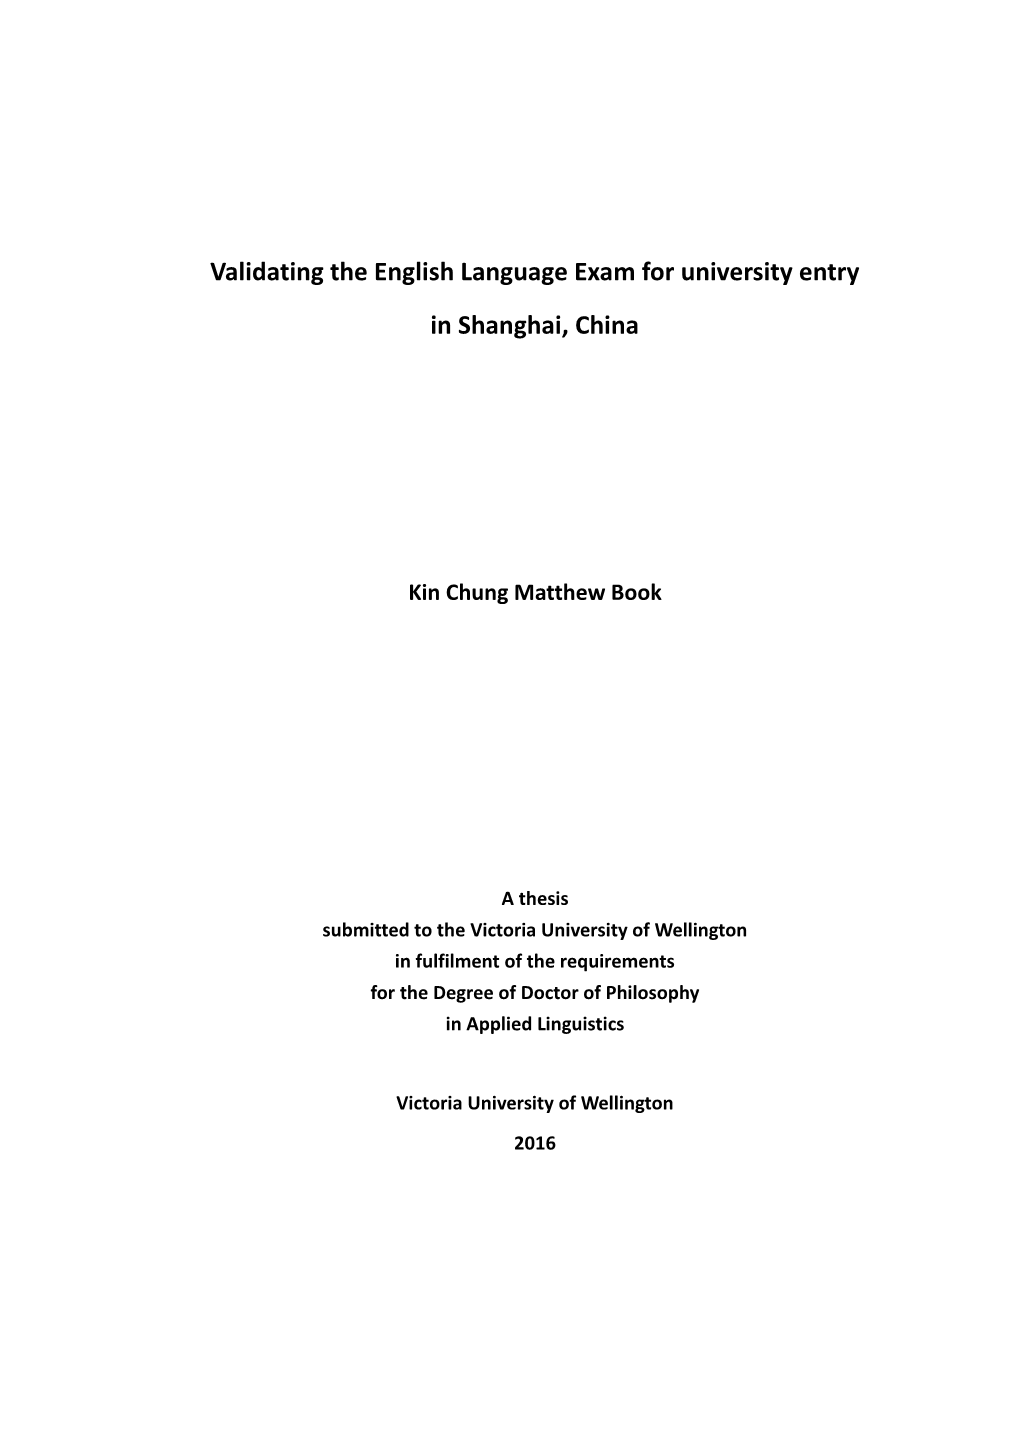 Validating the English Language Exam for University Entry in Shanghai, China